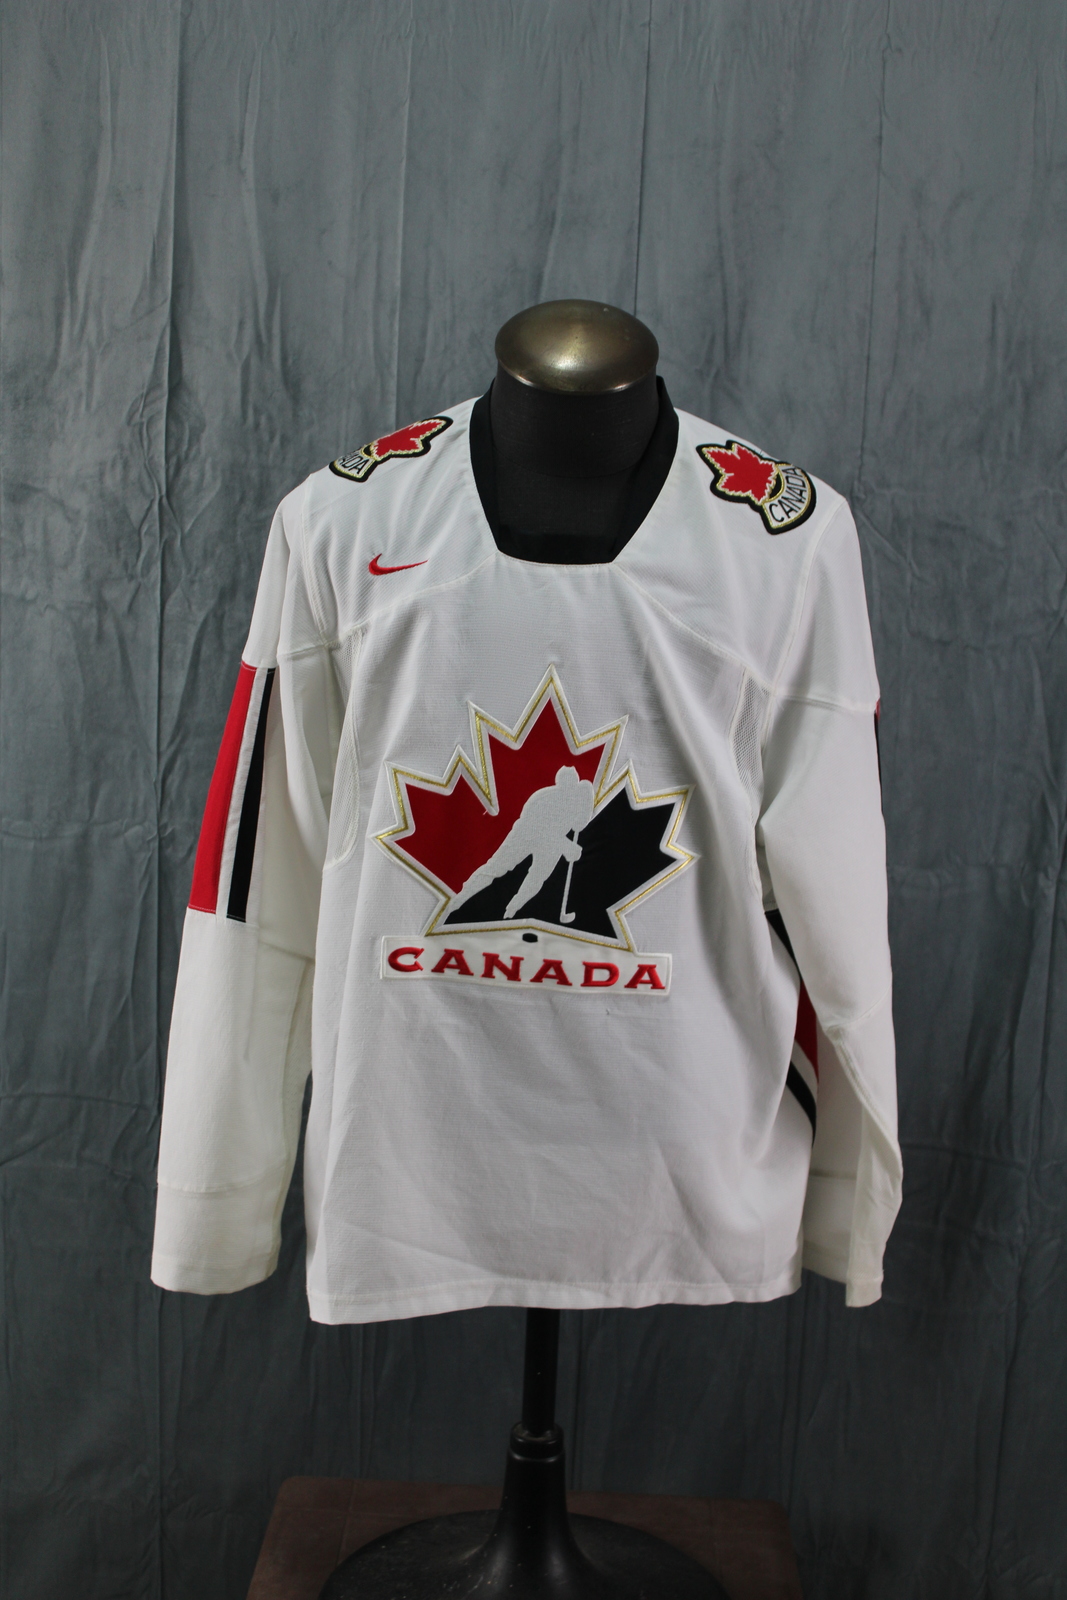 Team Canada Hockey Jersey (Retro) - 2006 Away Uniform by Nike - Men's Large - $95.00